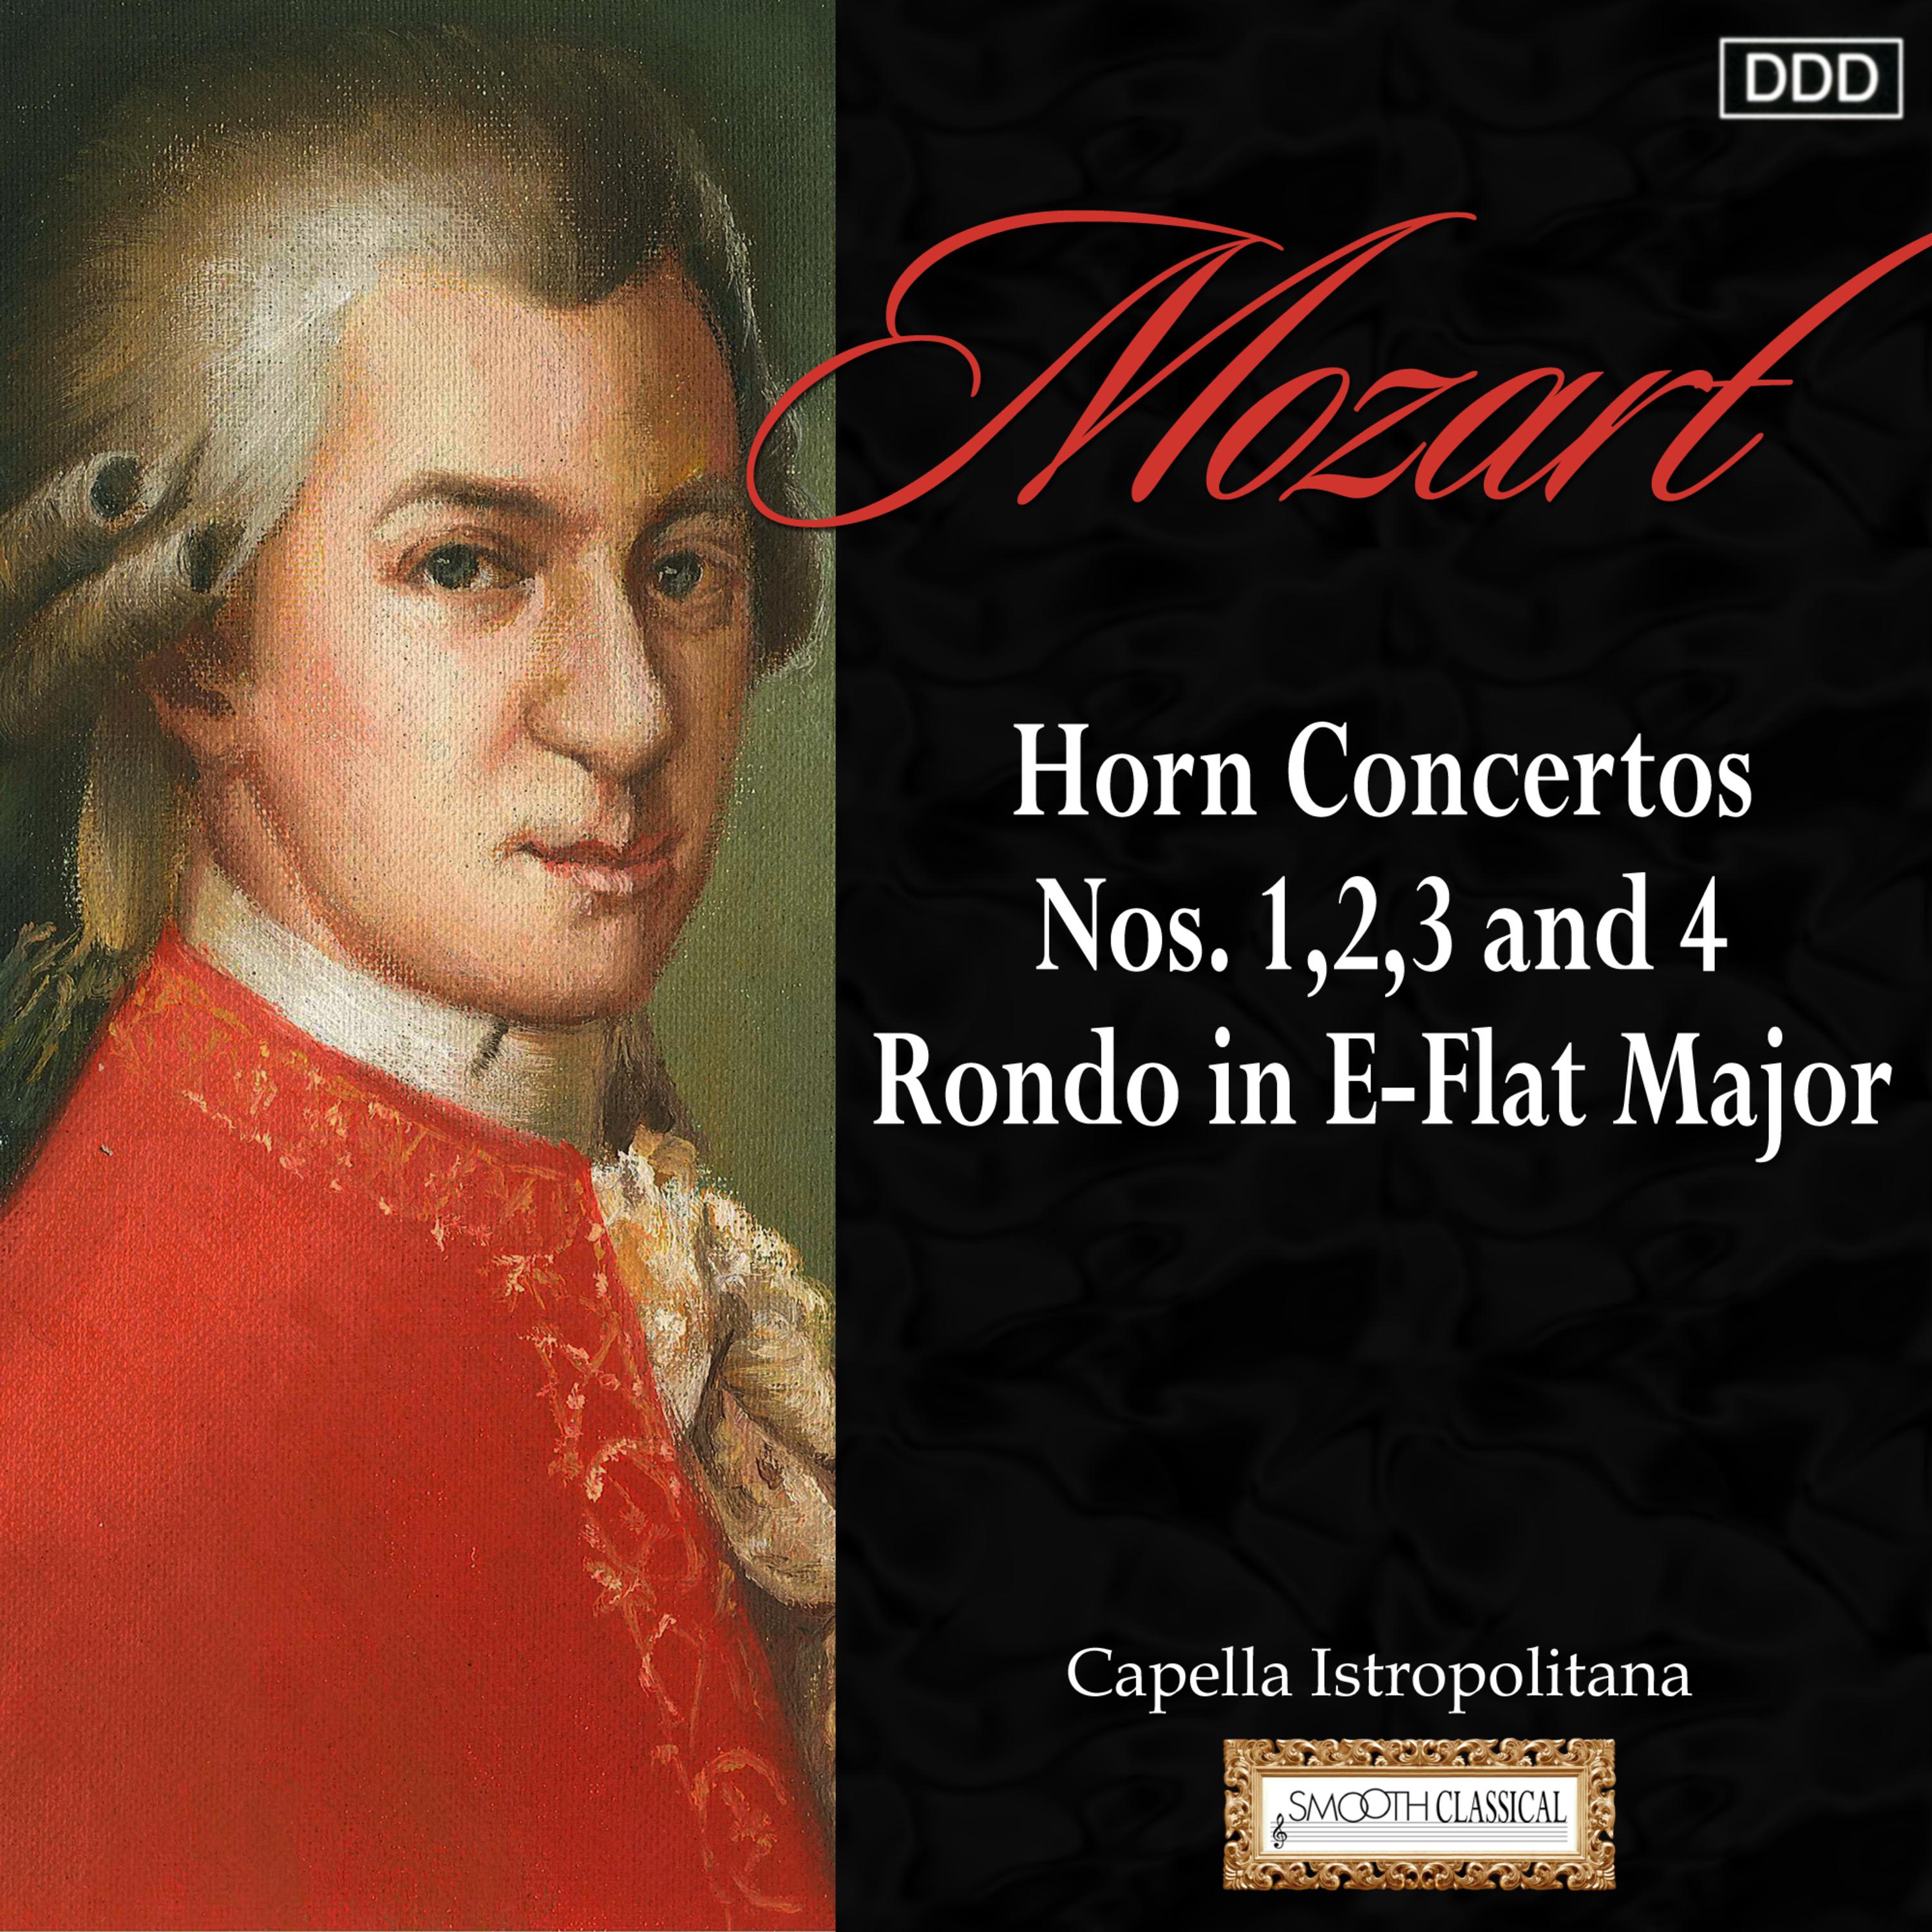 Horn Concerto No. 1 in D Major, K. 412: I. Allegro